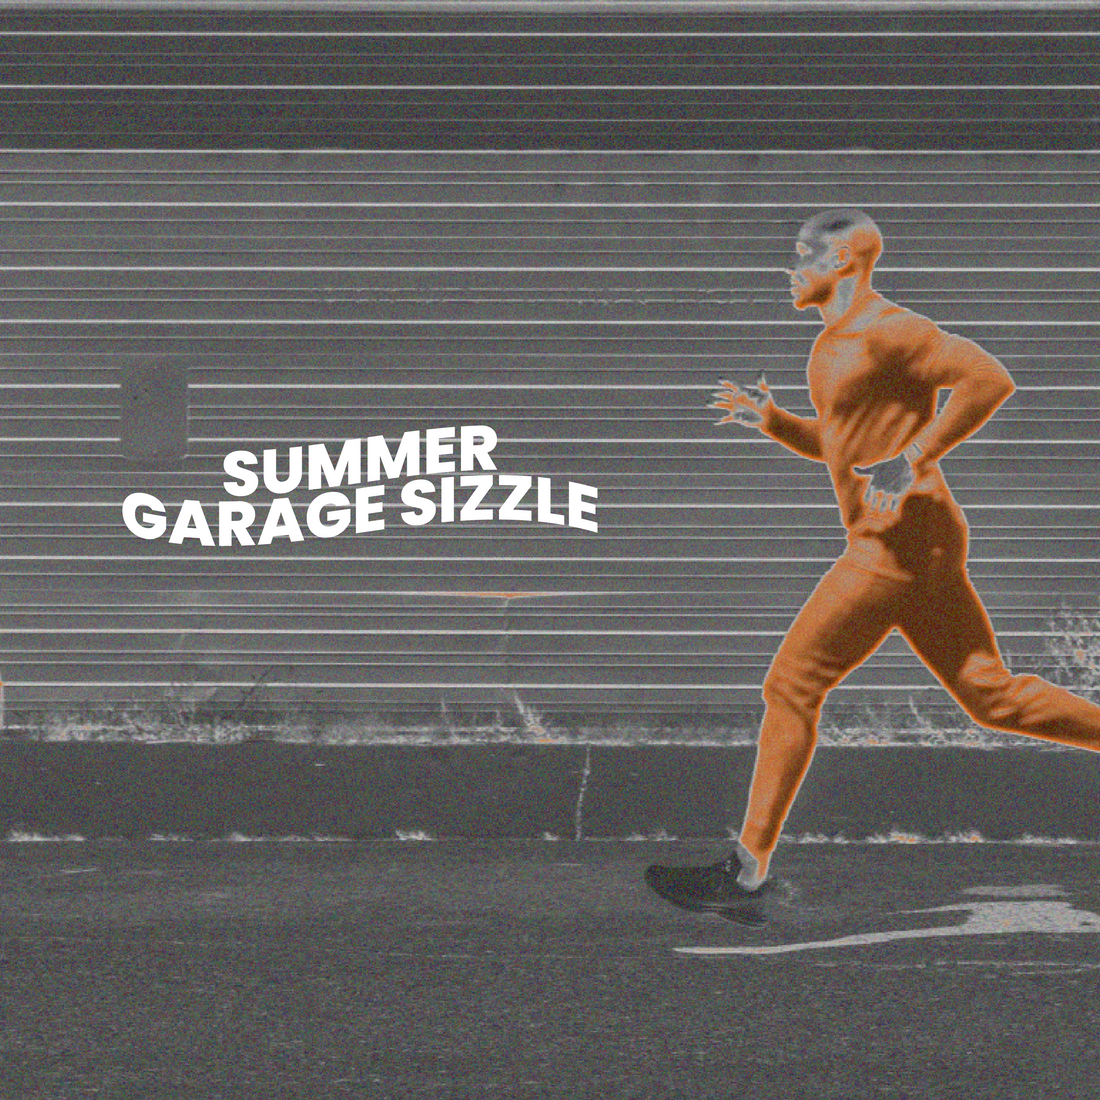 Summer of WODs: Week 3 - Unleash the Heat with "Summer Garage Sizzle"